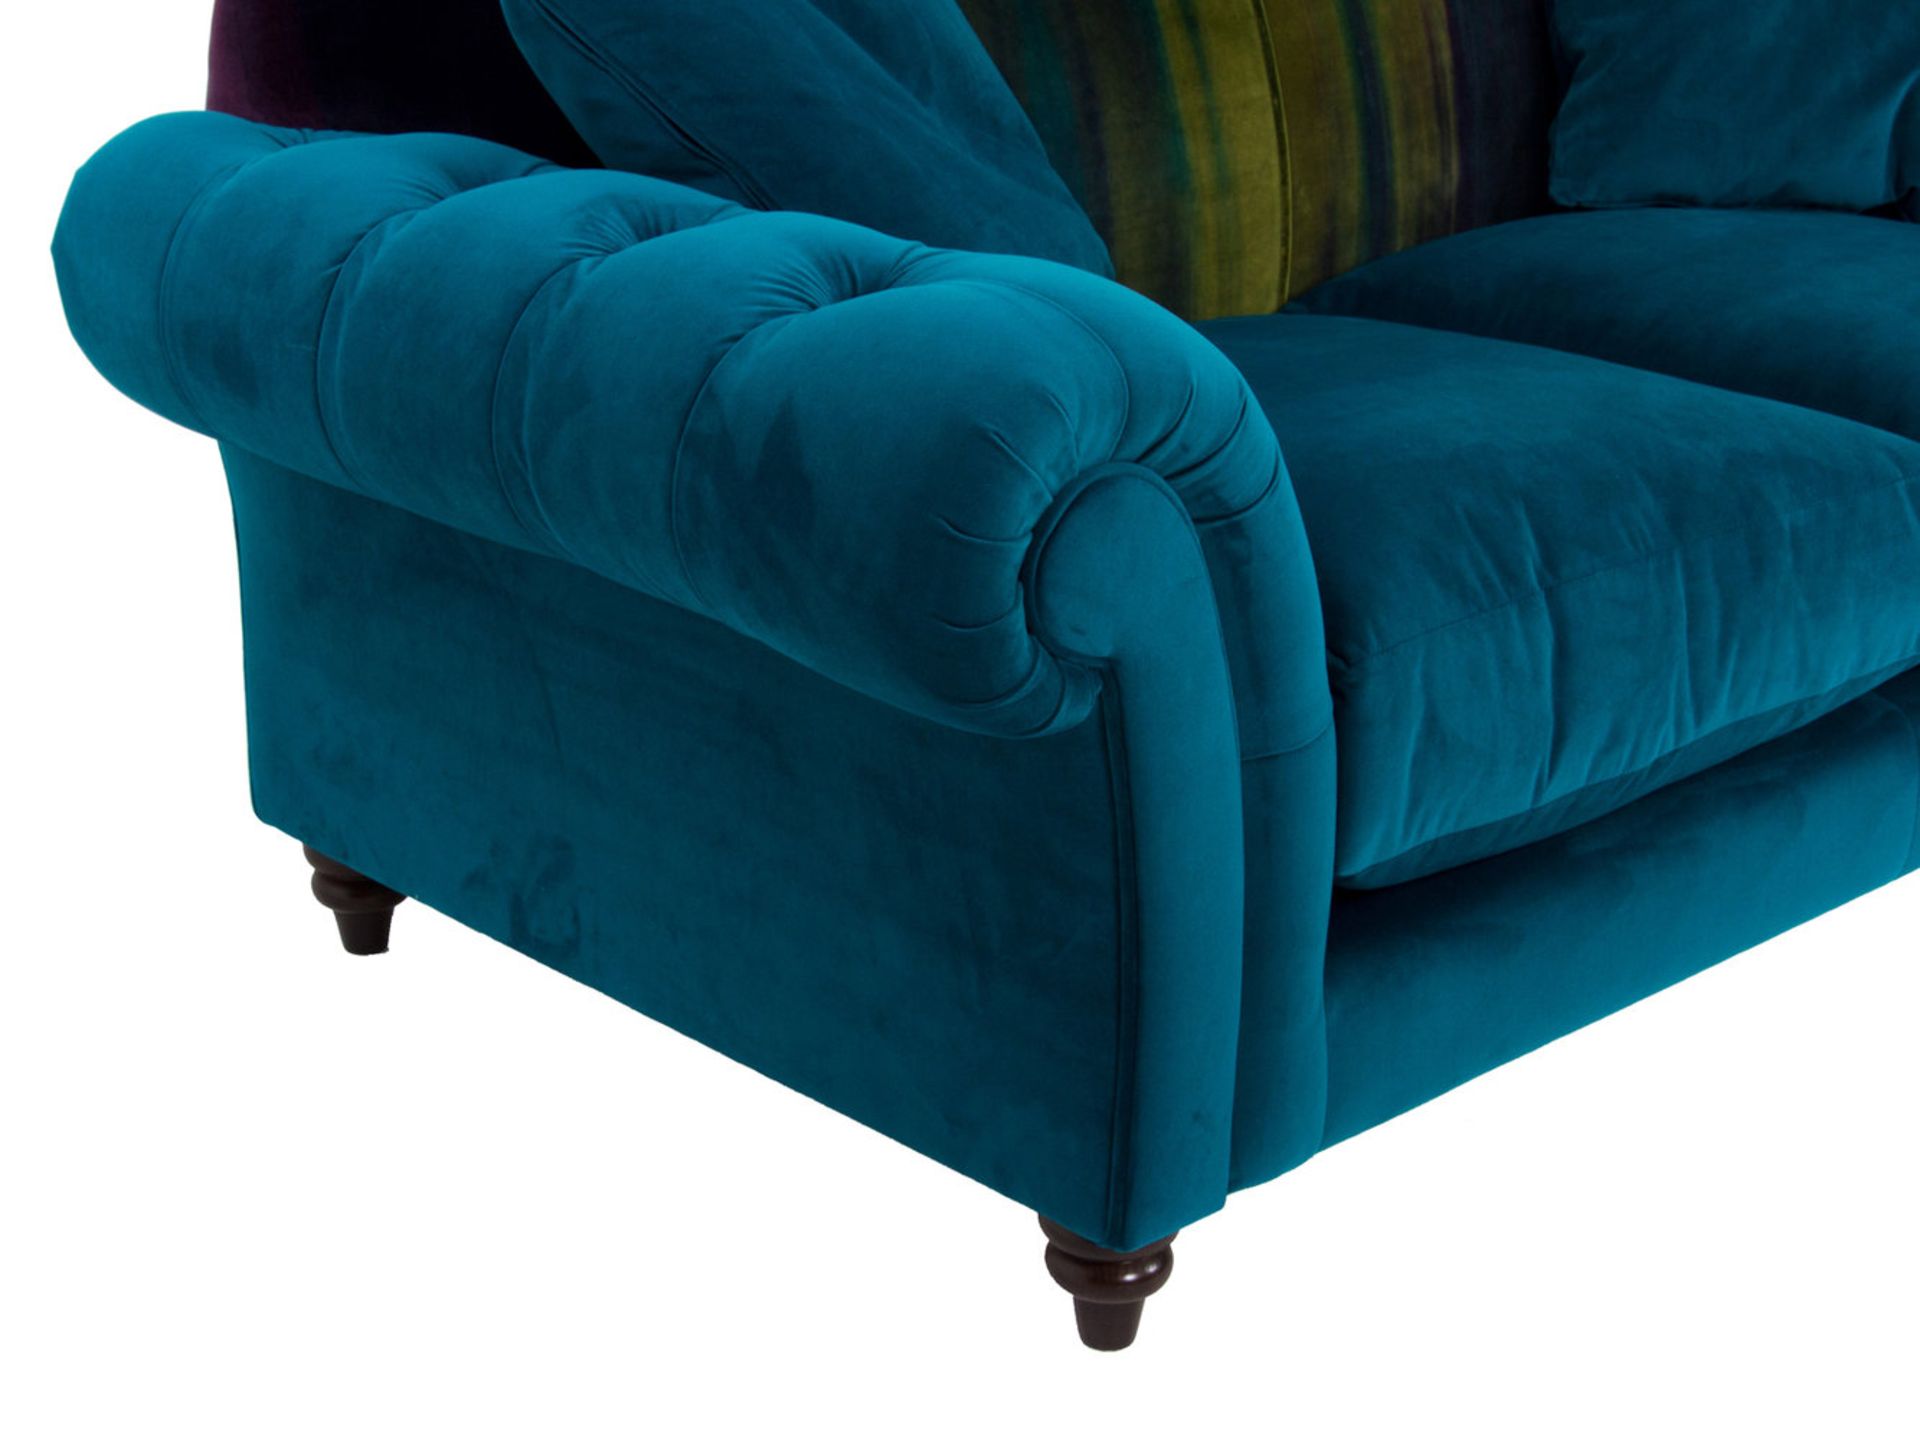 1 x Lytton Mallard Sofa Upholstered in Harlequin Velvet Fabric - RRP £1,259! - Bild 4 aus 7